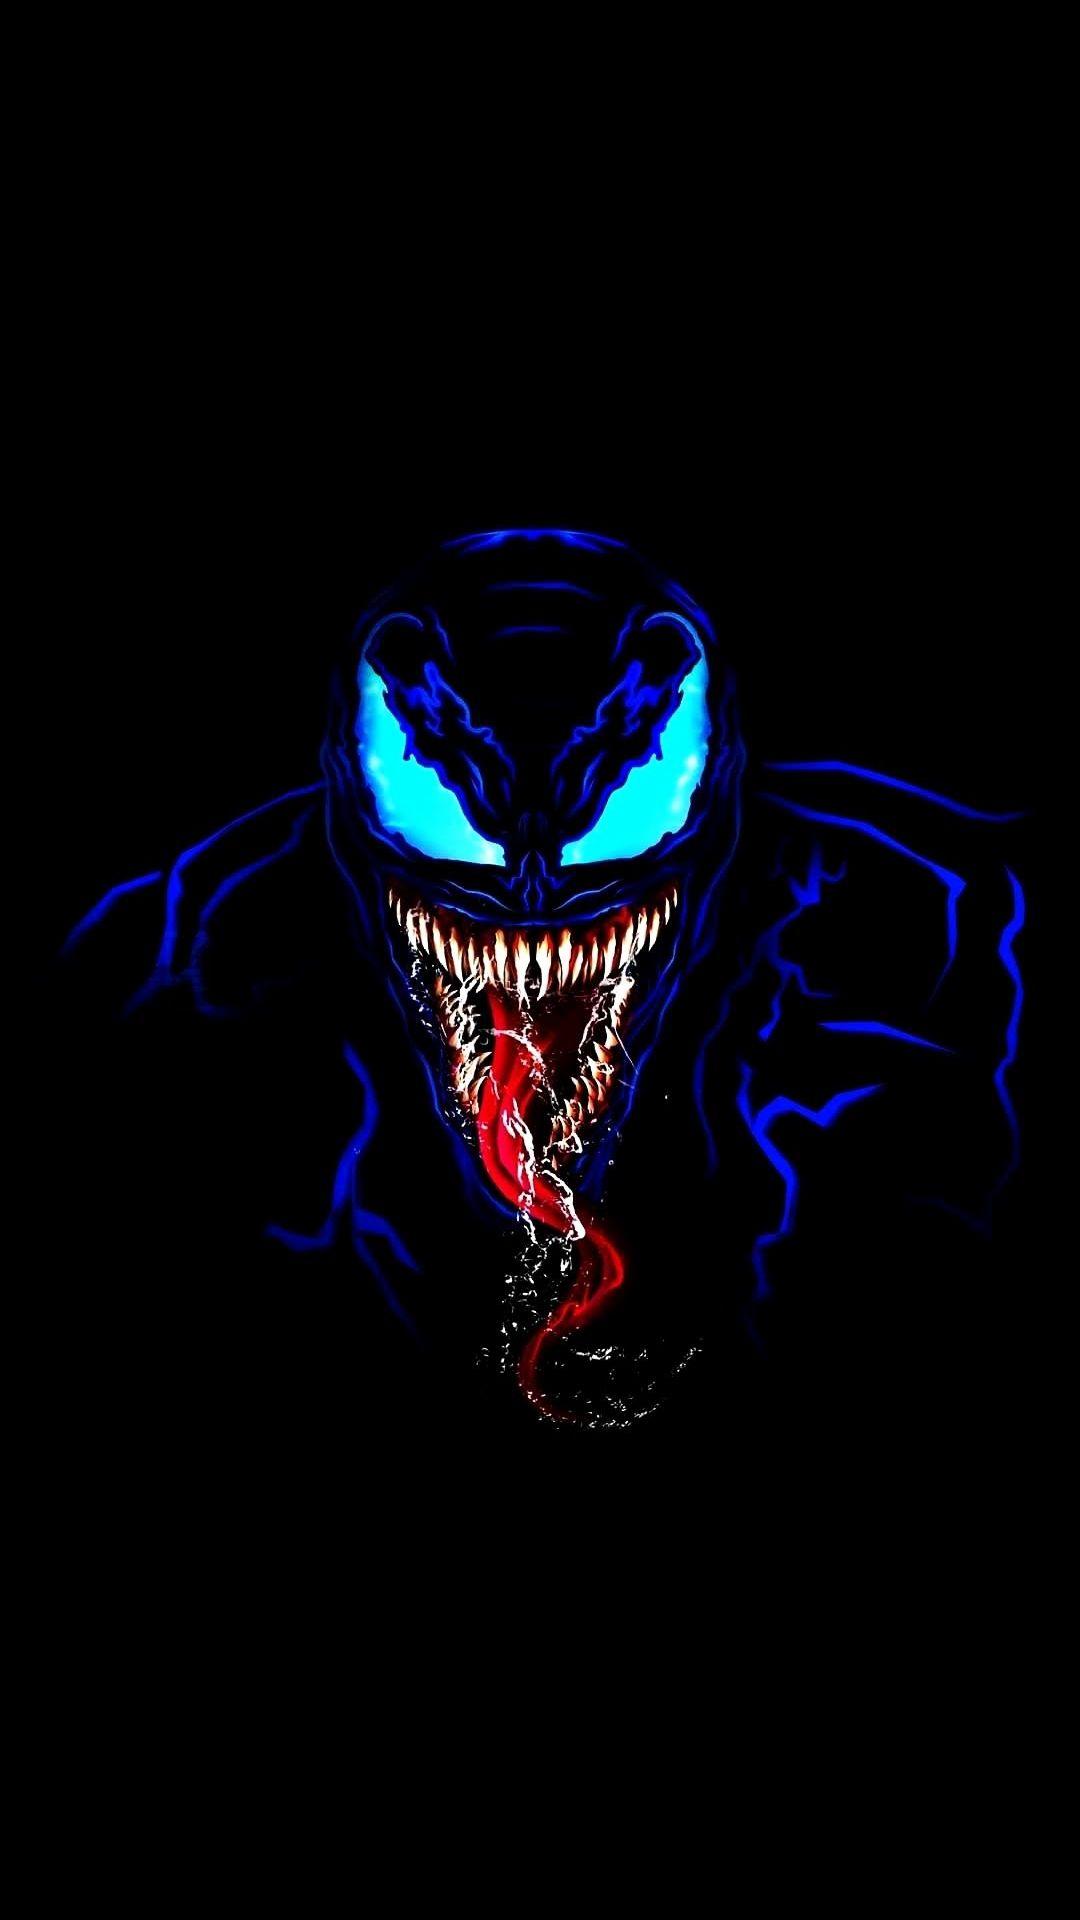 1080x1920 Venom Hình Nền iPhone Lovely Venom Dark Black Minimal iPhone